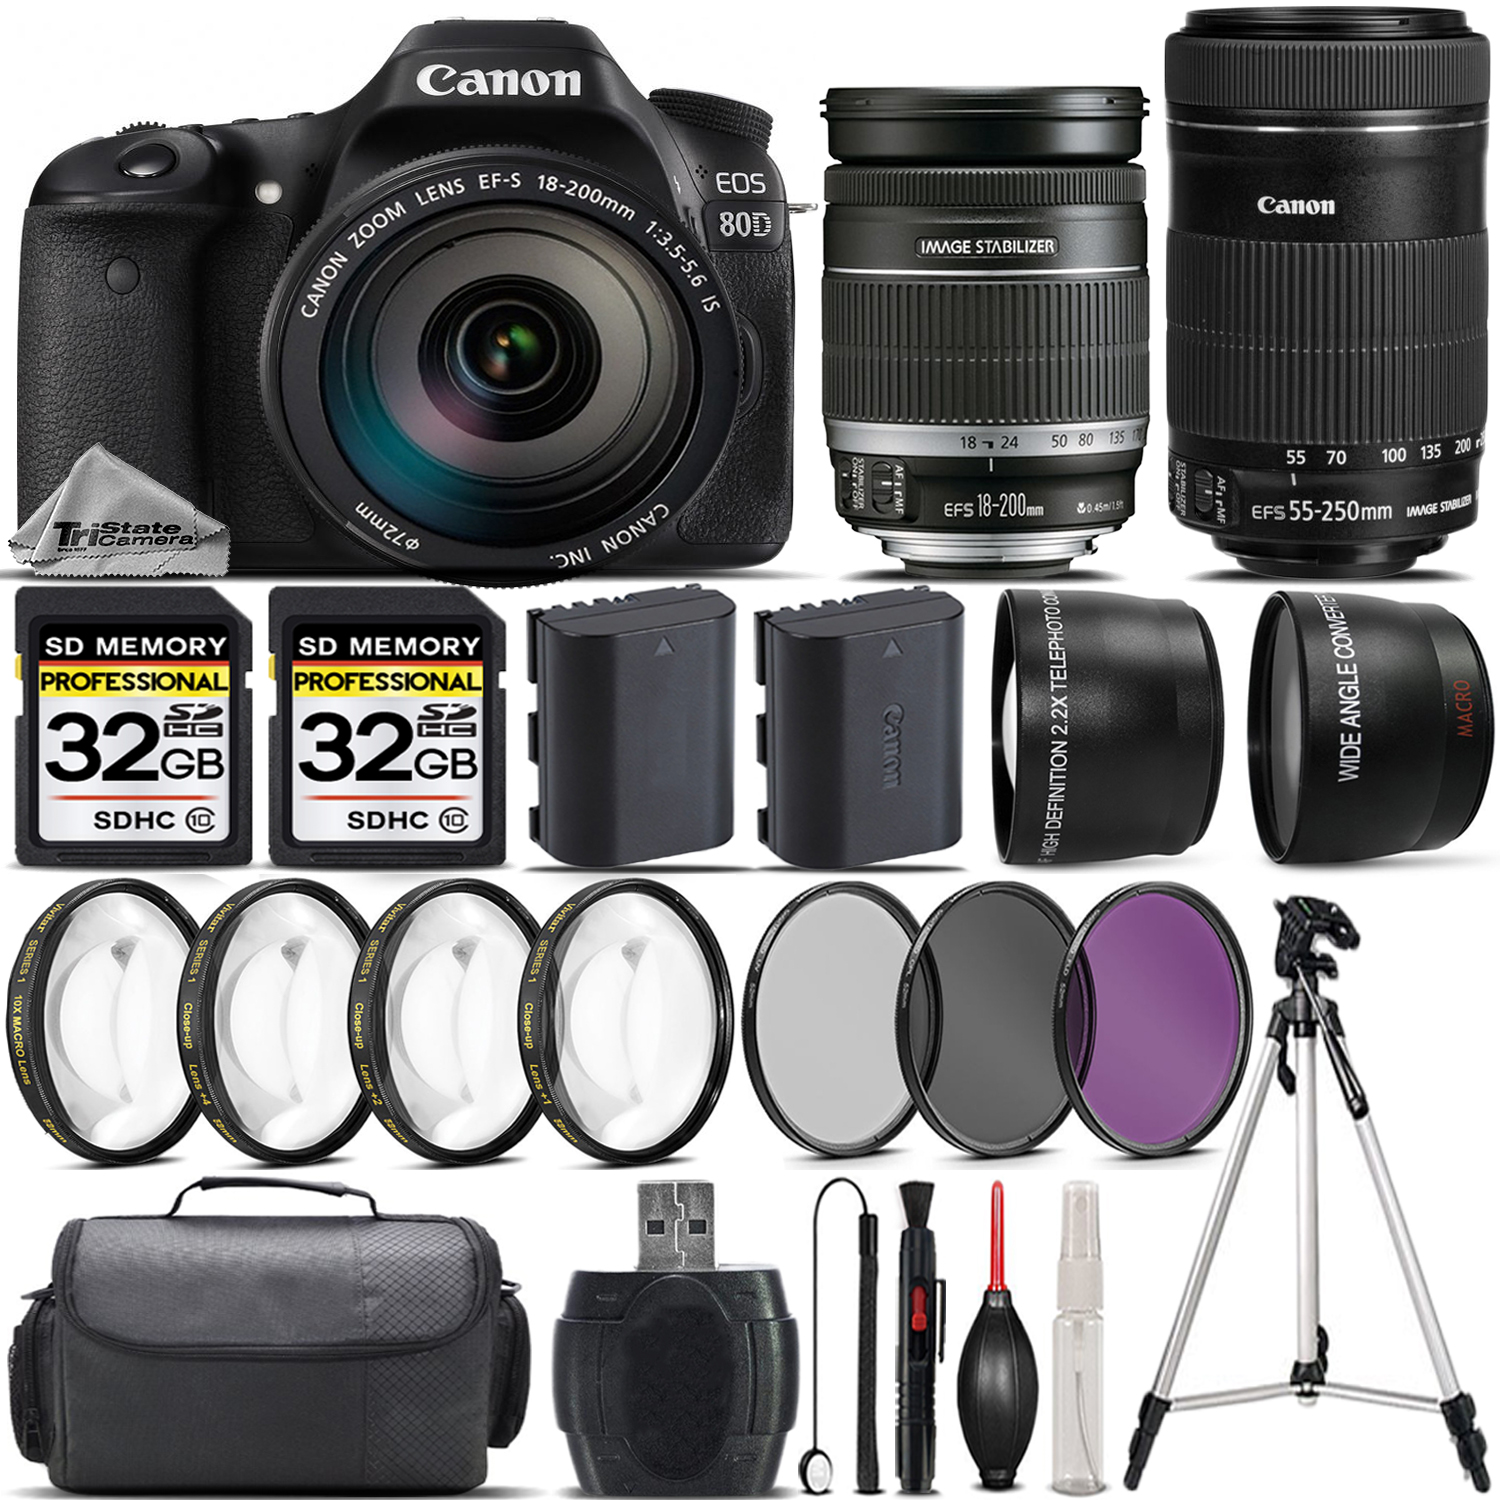 EOS 80D DSLR Camera + Canon 18-200mm Lens + 55-250mm STM + 4PC Macro Kit *FREE SHIPPING*